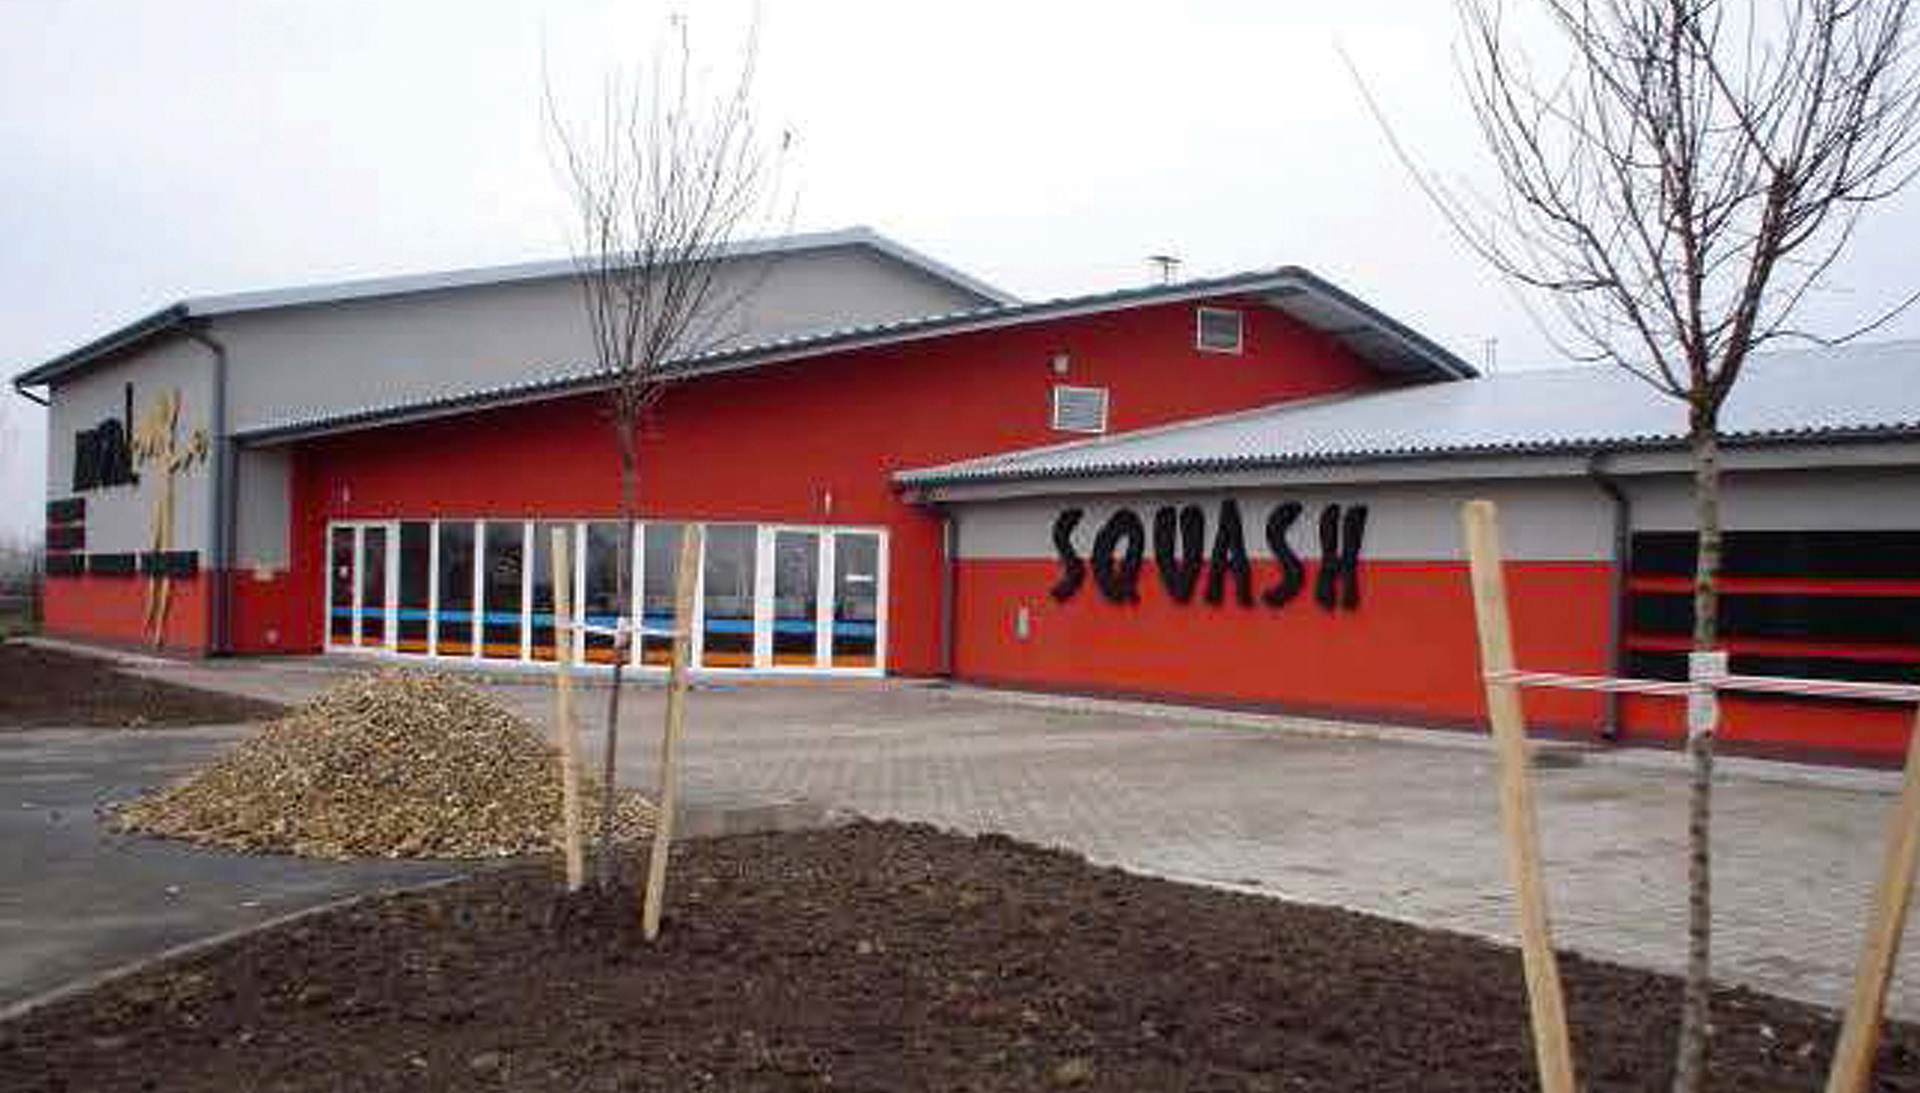 Angyal Squash & Bowling Klub, Tiszaújváros 3